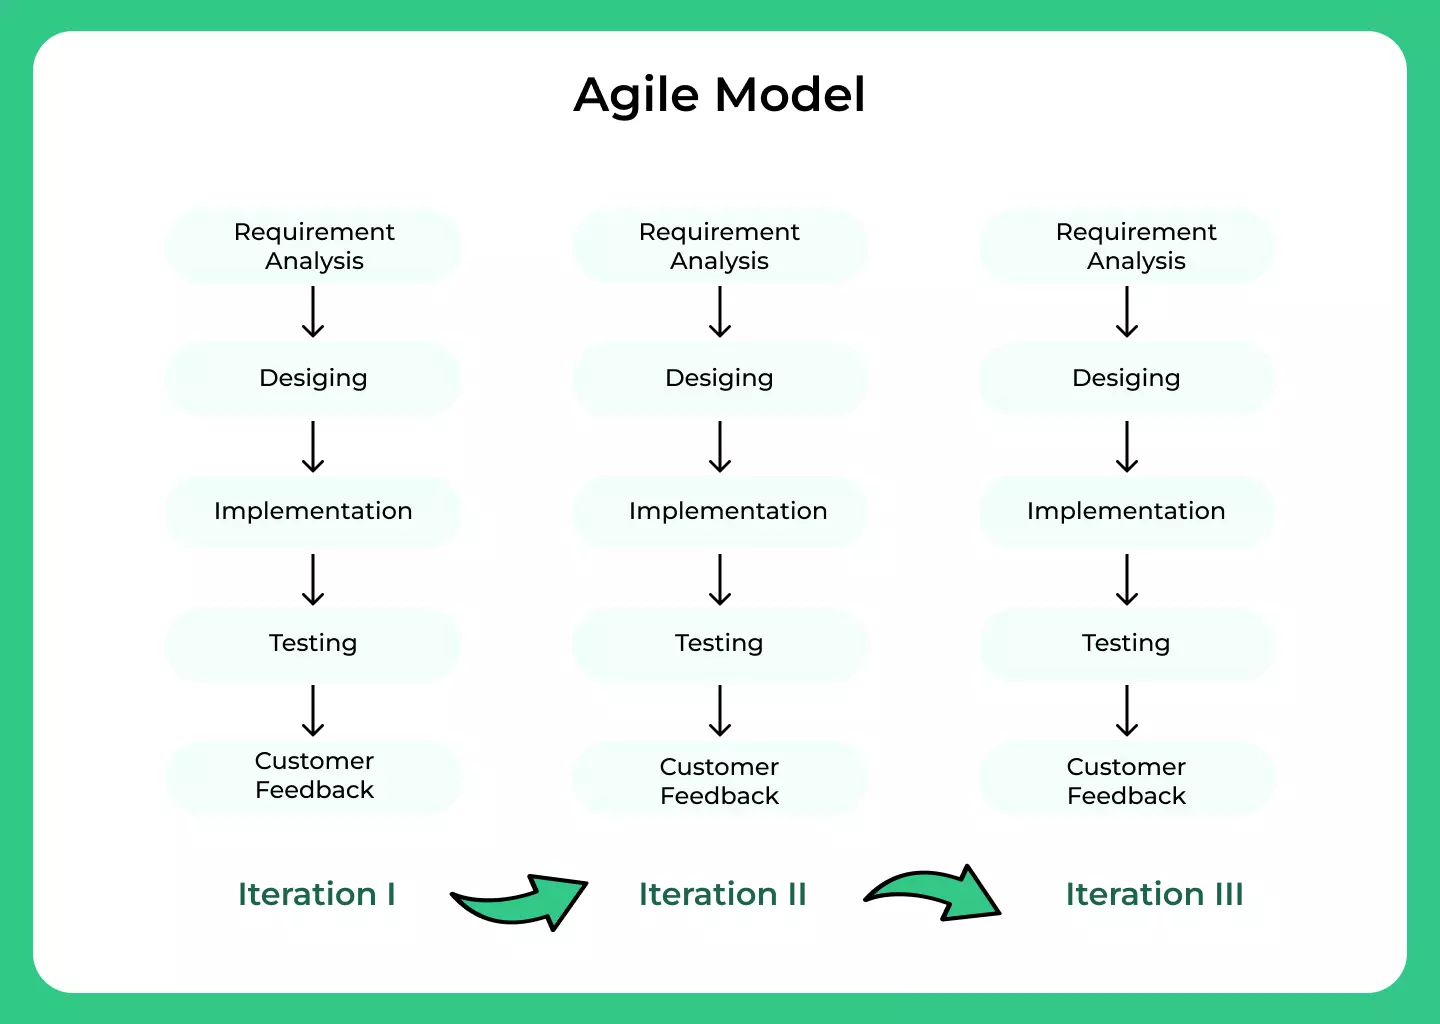 Agile Model in SDLC